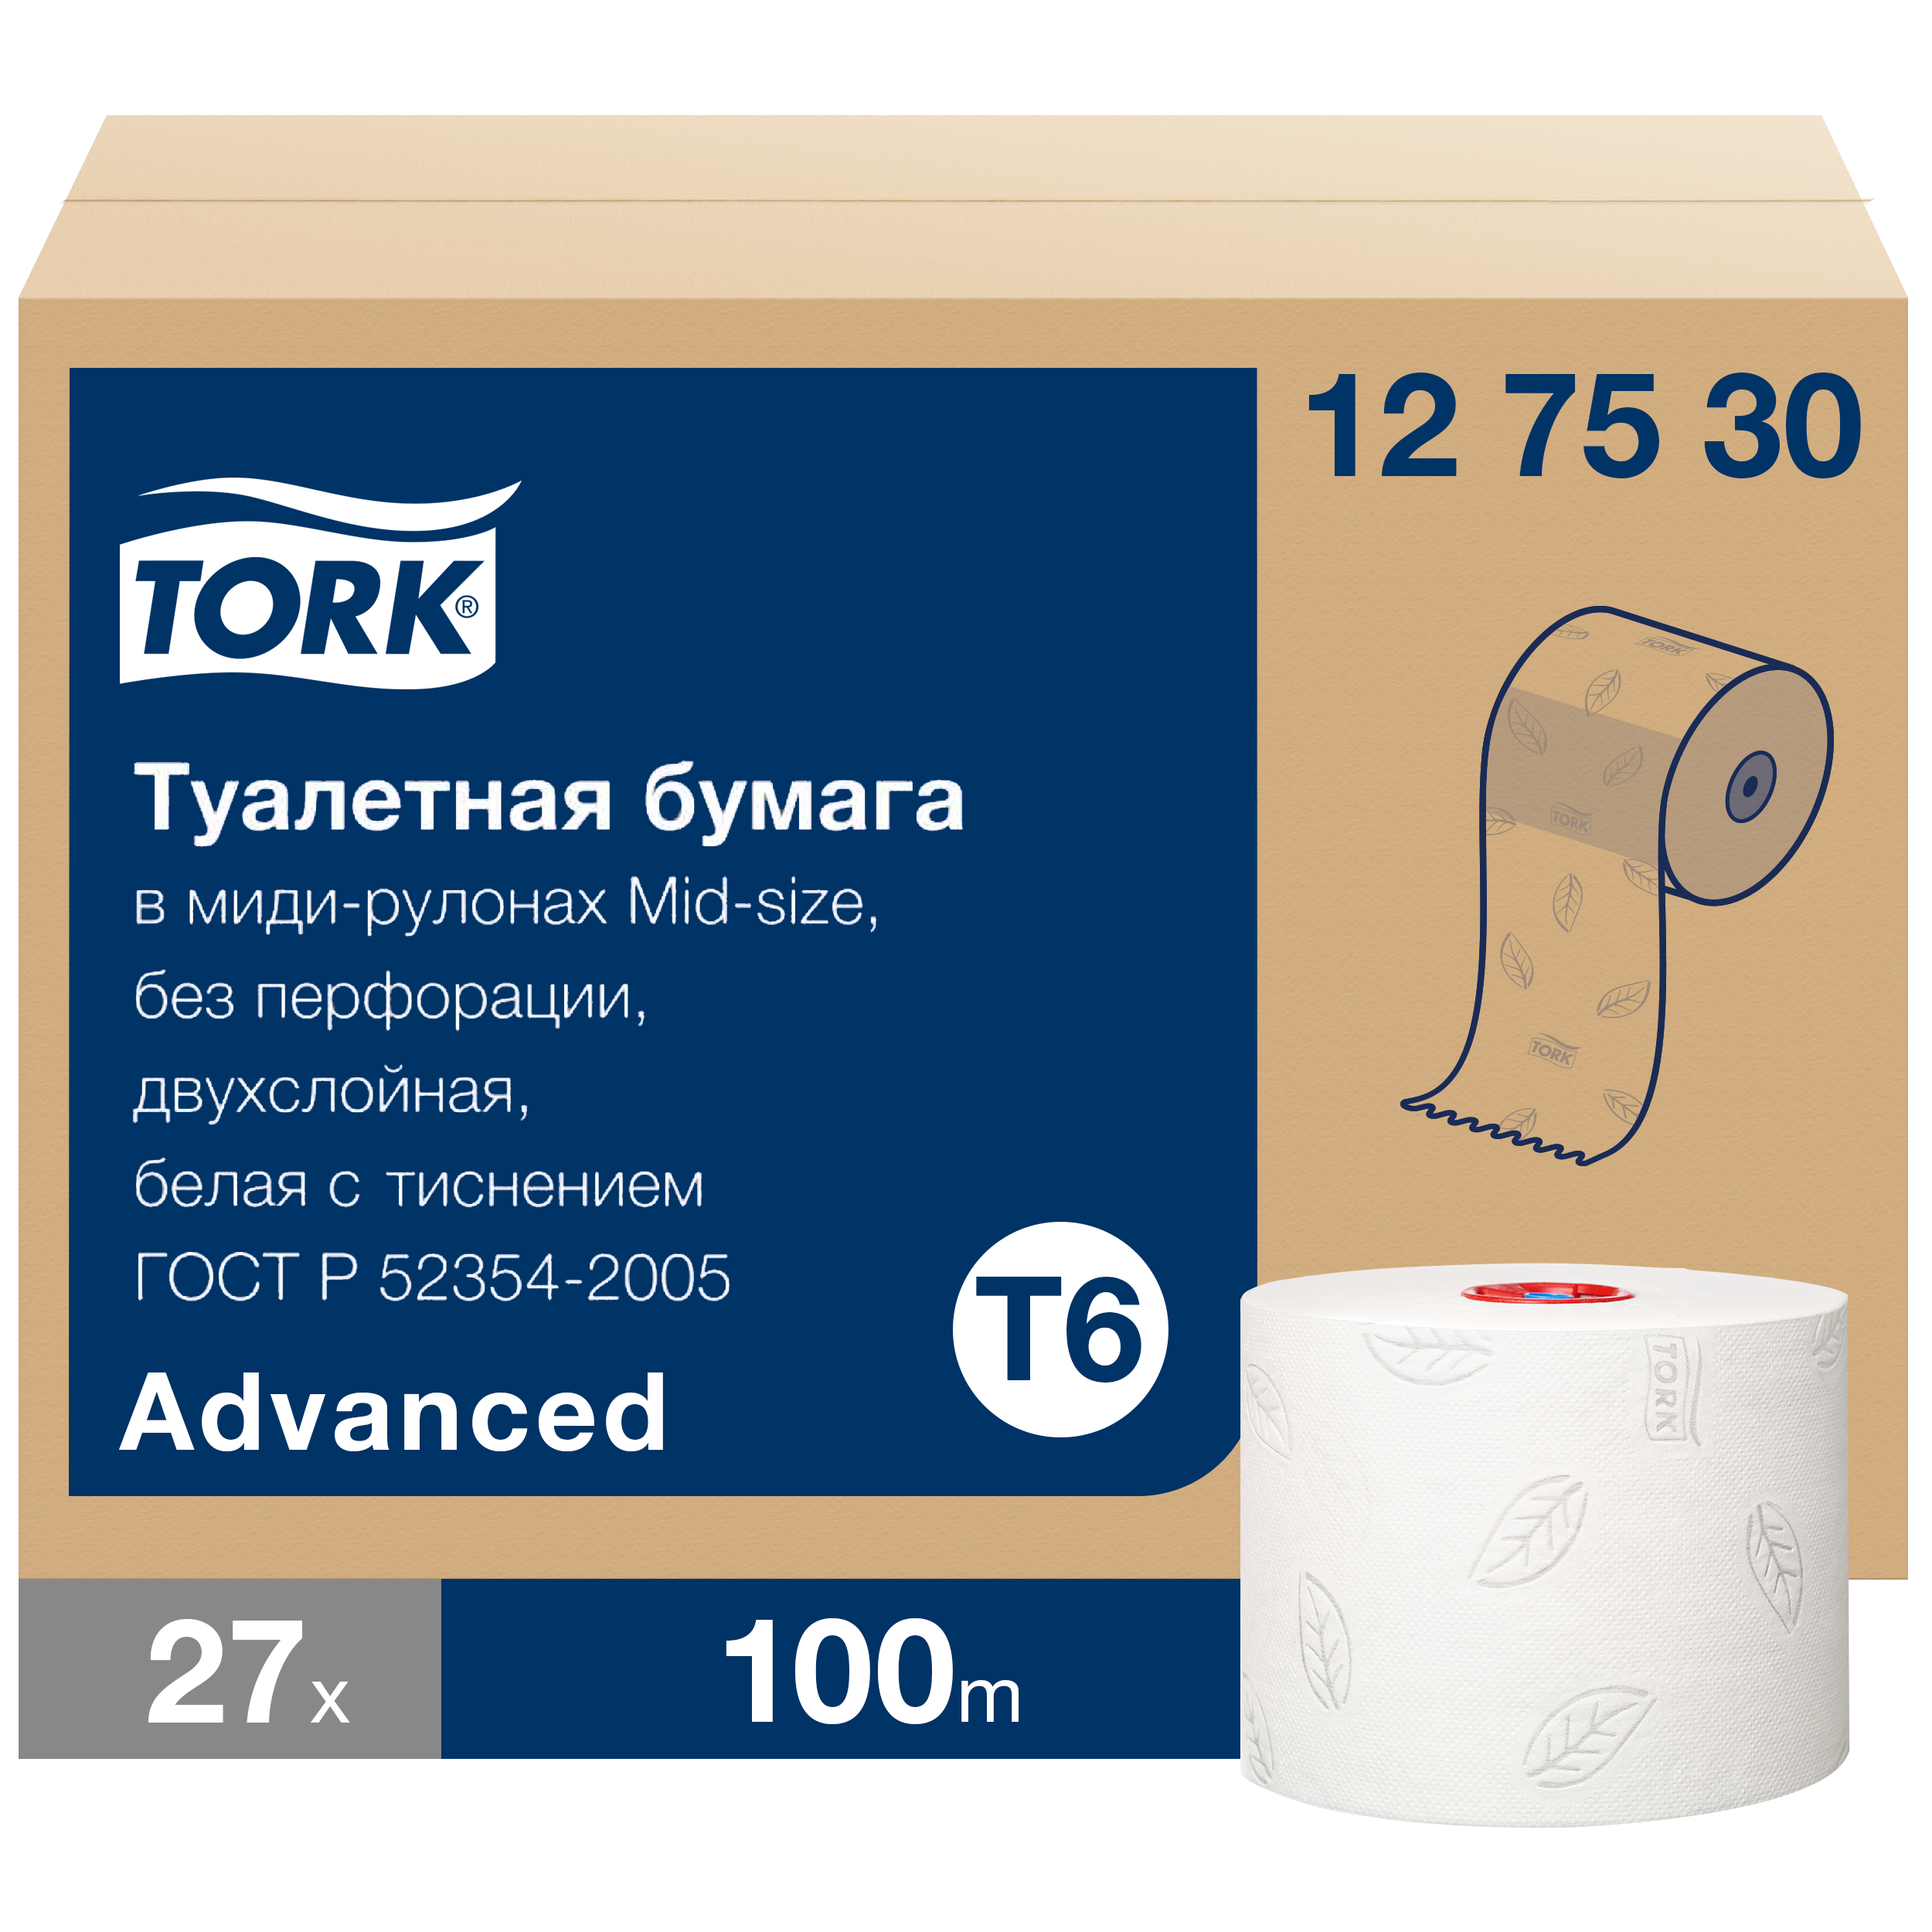 Бумага туалетная Tork Mid-size Advanced в рулонах, T6, 2 слоя, 100м, 27 рулонов туалетная бумага в мини рулонах tork advanced smartone